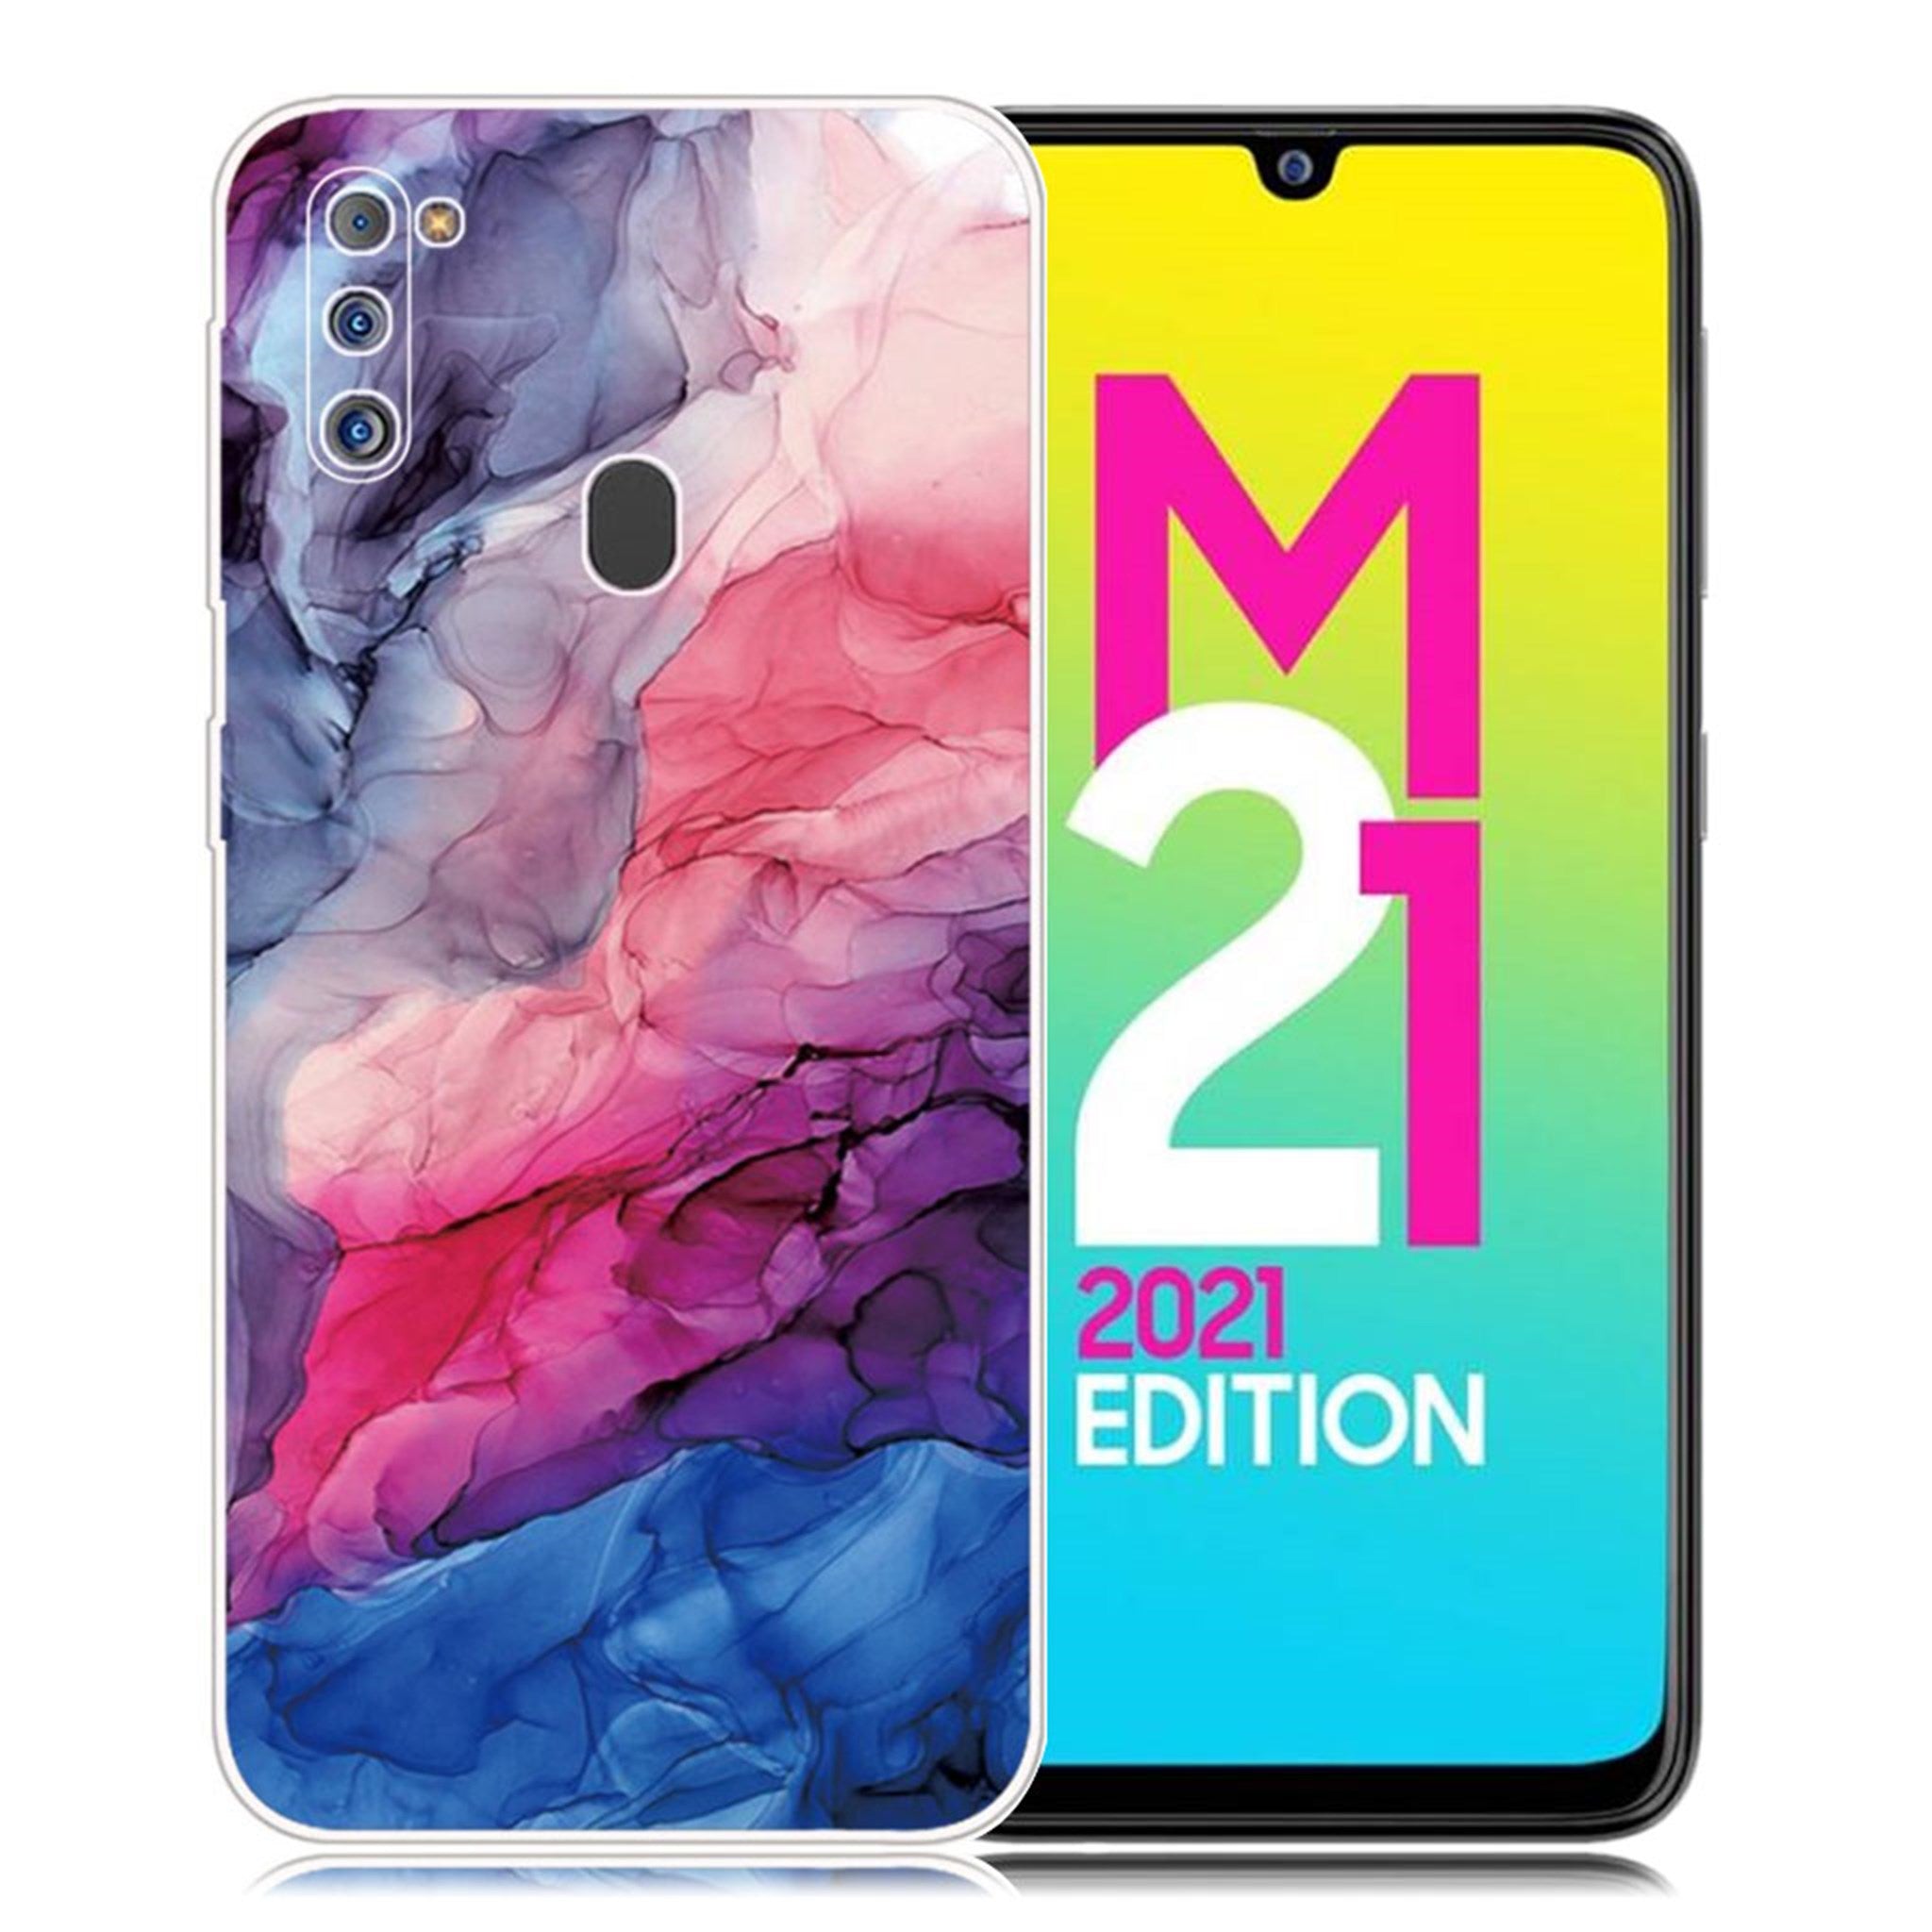 Marble Samsung Galaxy M21 2021 case - Aqueous Vibrant Pattern